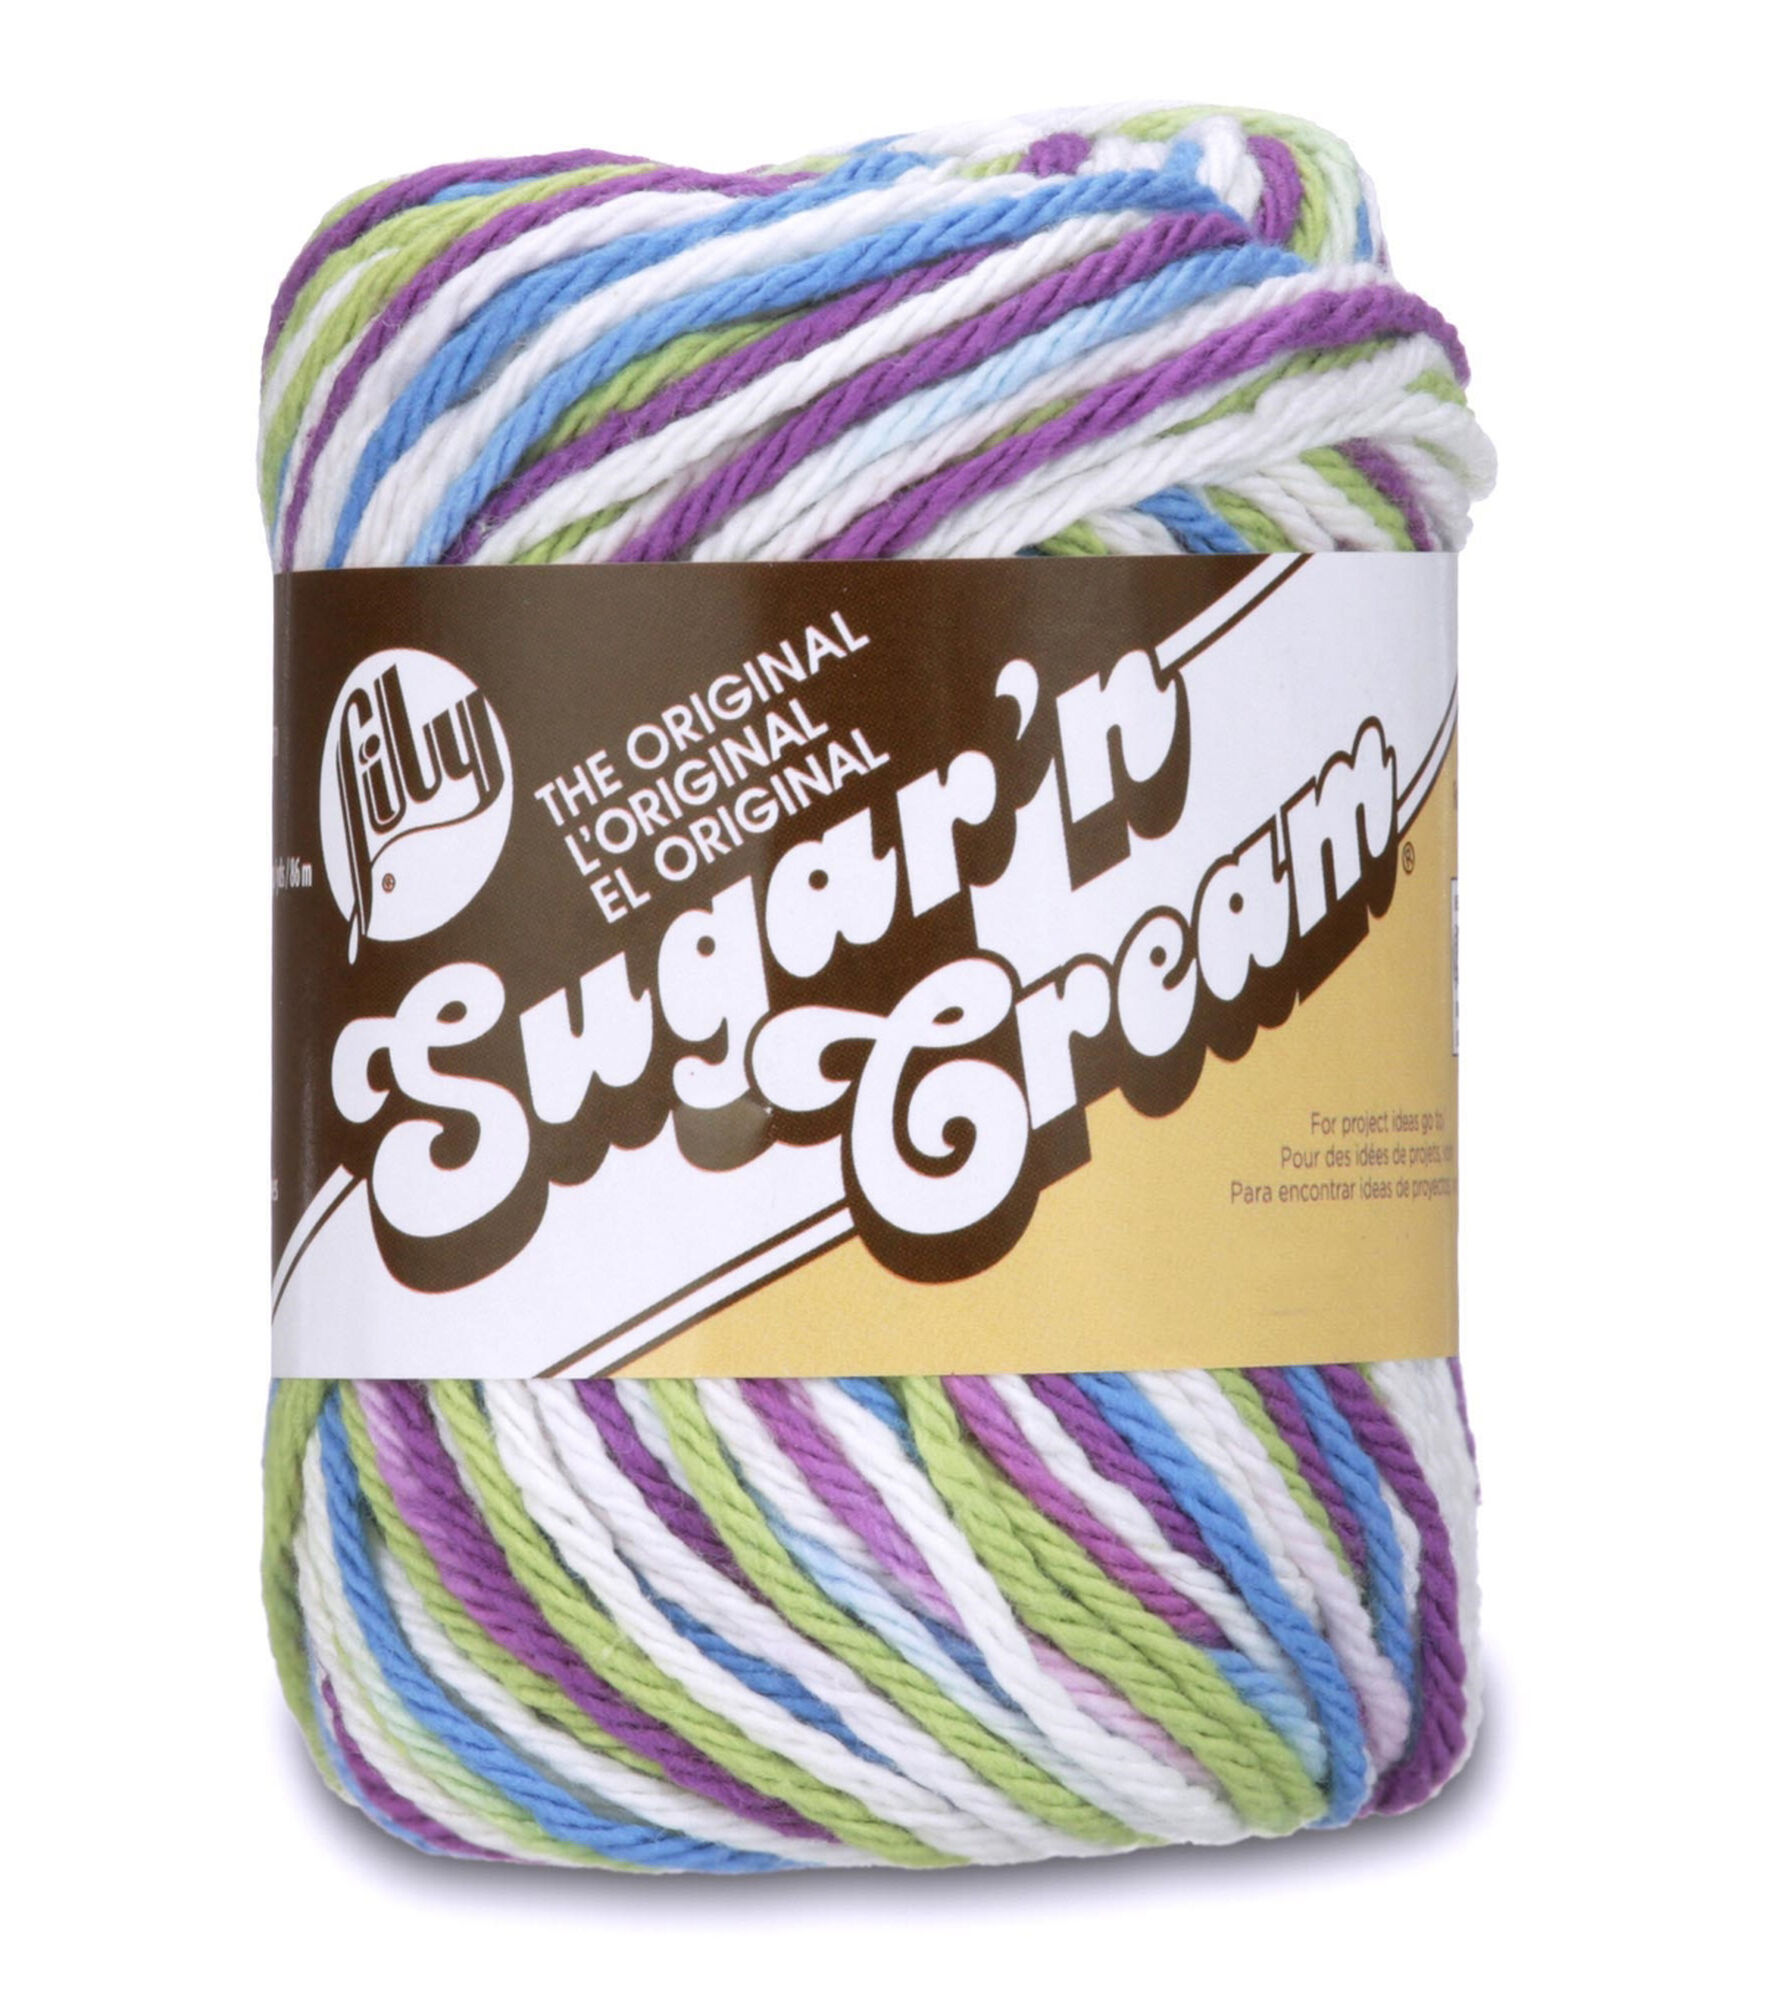 Lily Sugar'N Cream Love Yarn - 6 Pack of 57g/2oz - Cotton - 4 Medium  (Worsted) - 95 Yards - Knitting/Crochet